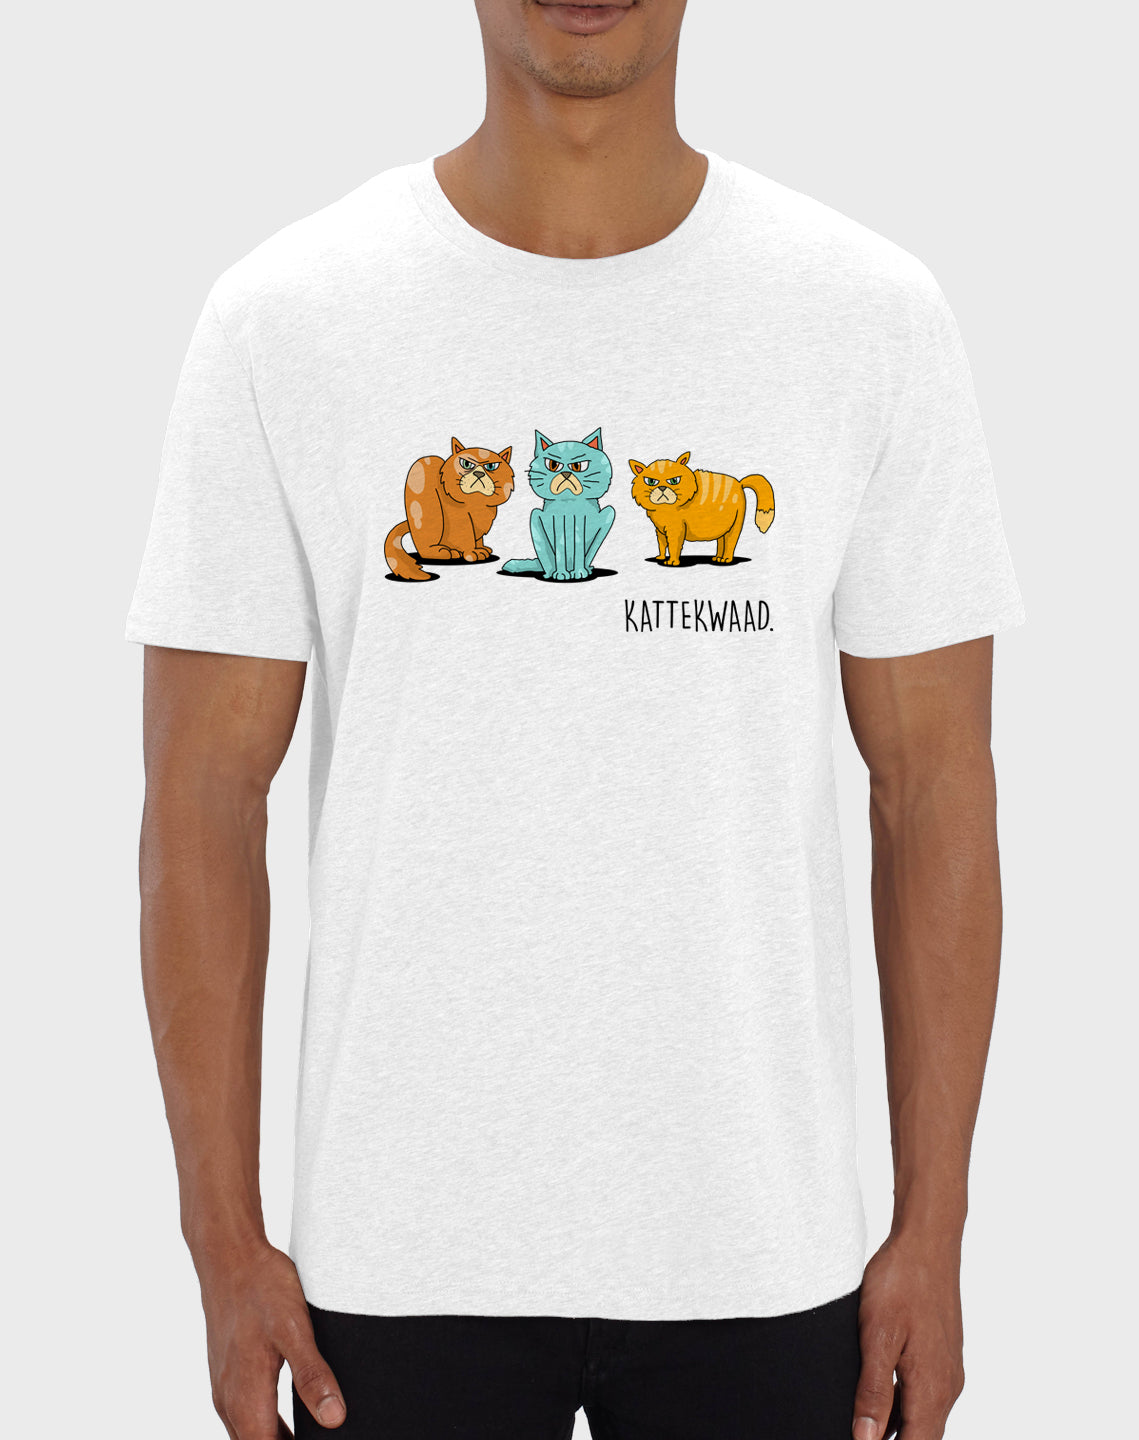 Idees Vol Vrees® Kattekwaad Men's T-shirt